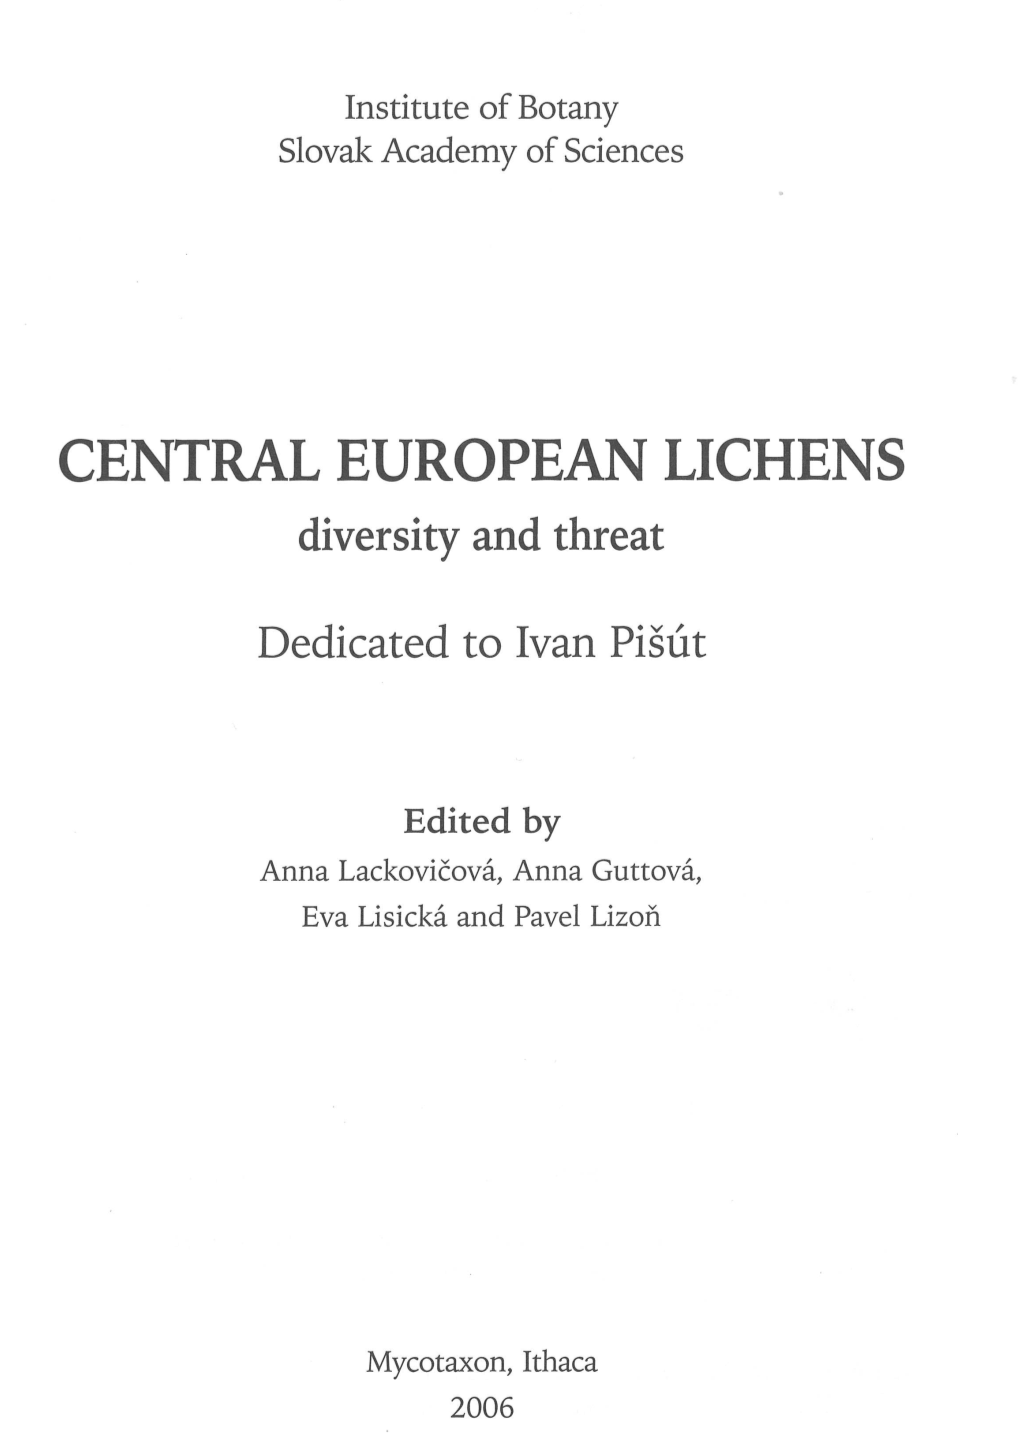 CENTRAL EUROPEAN LICHENS Diversity and Threat